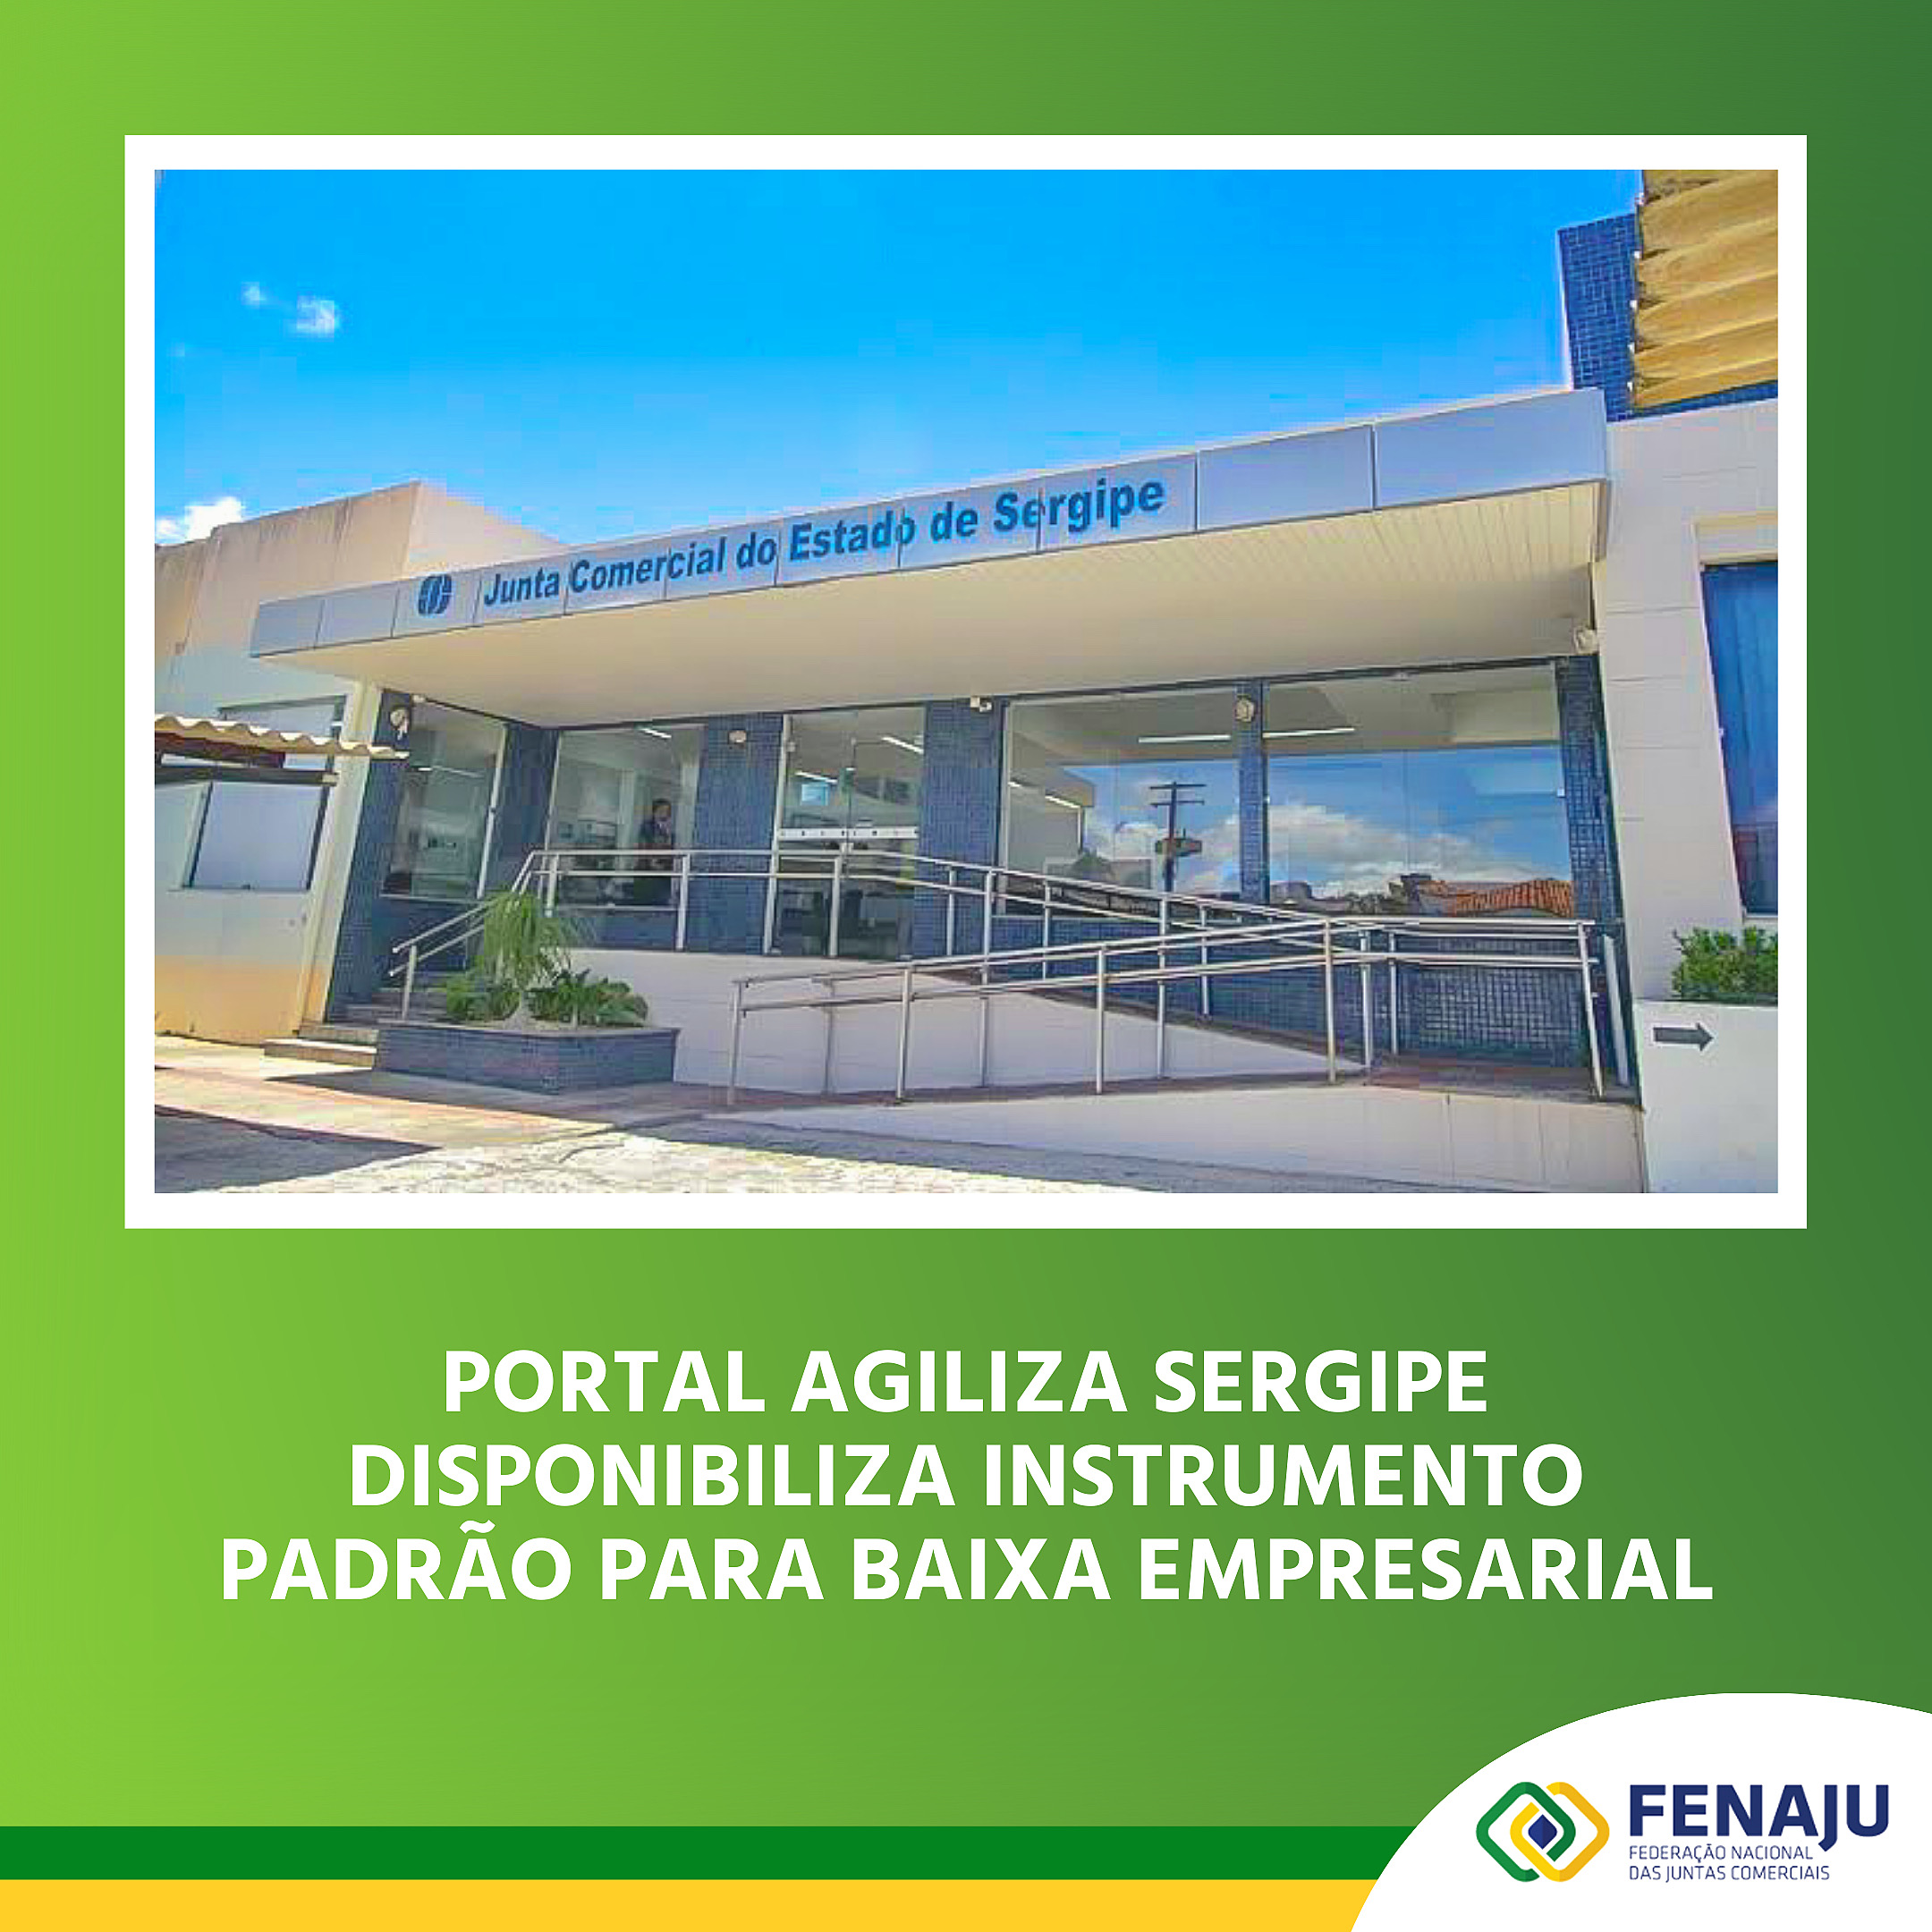 You are currently viewing Portal Agiliza Sergipe disponibiliza instrumento padrão para baixa empresarial